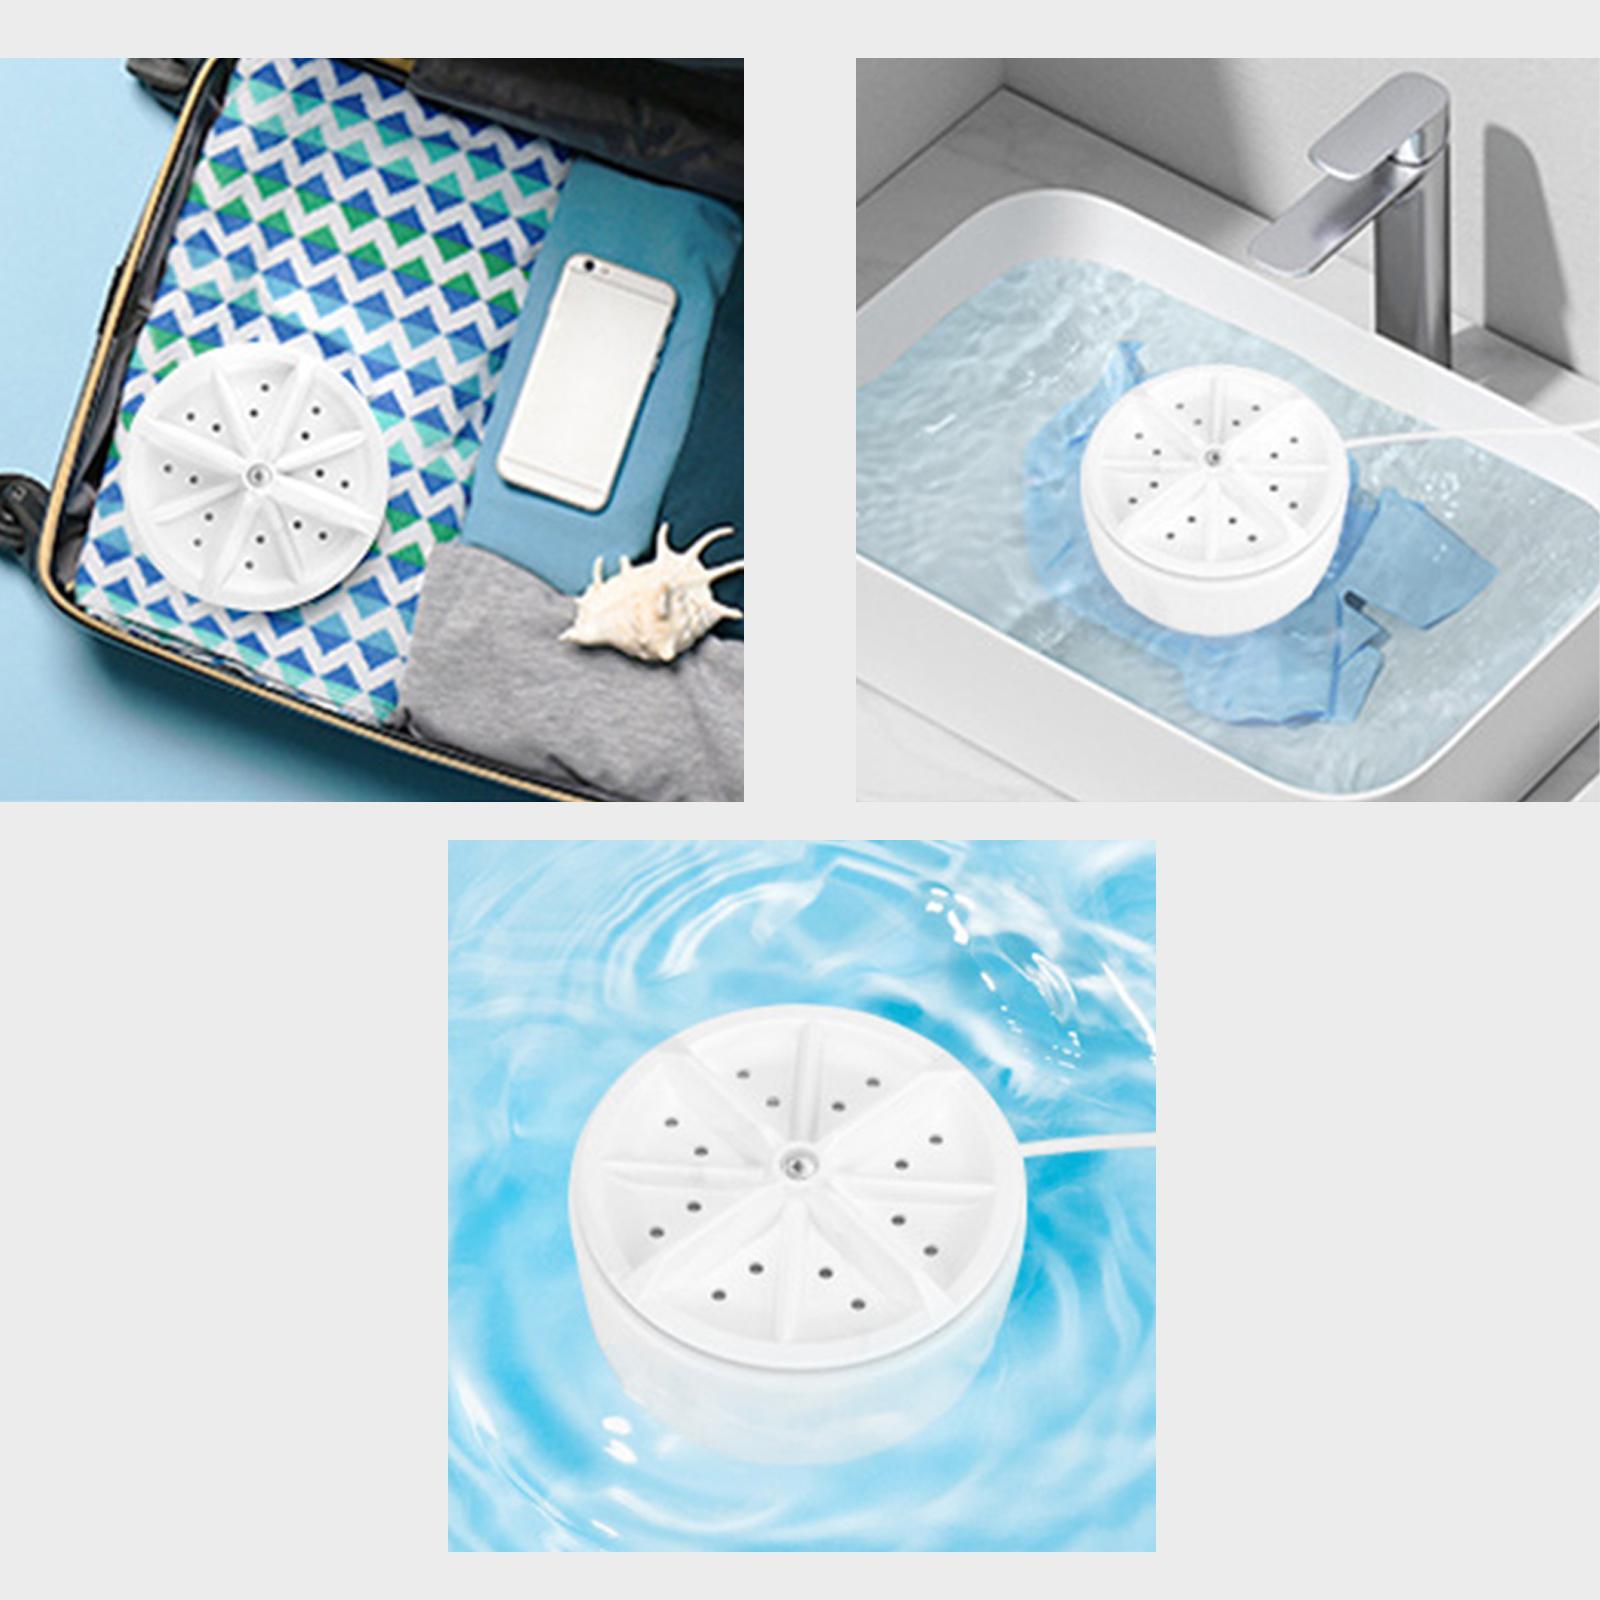 Mini Washing Machine USB Travel Washer for Travel College Room Laundry